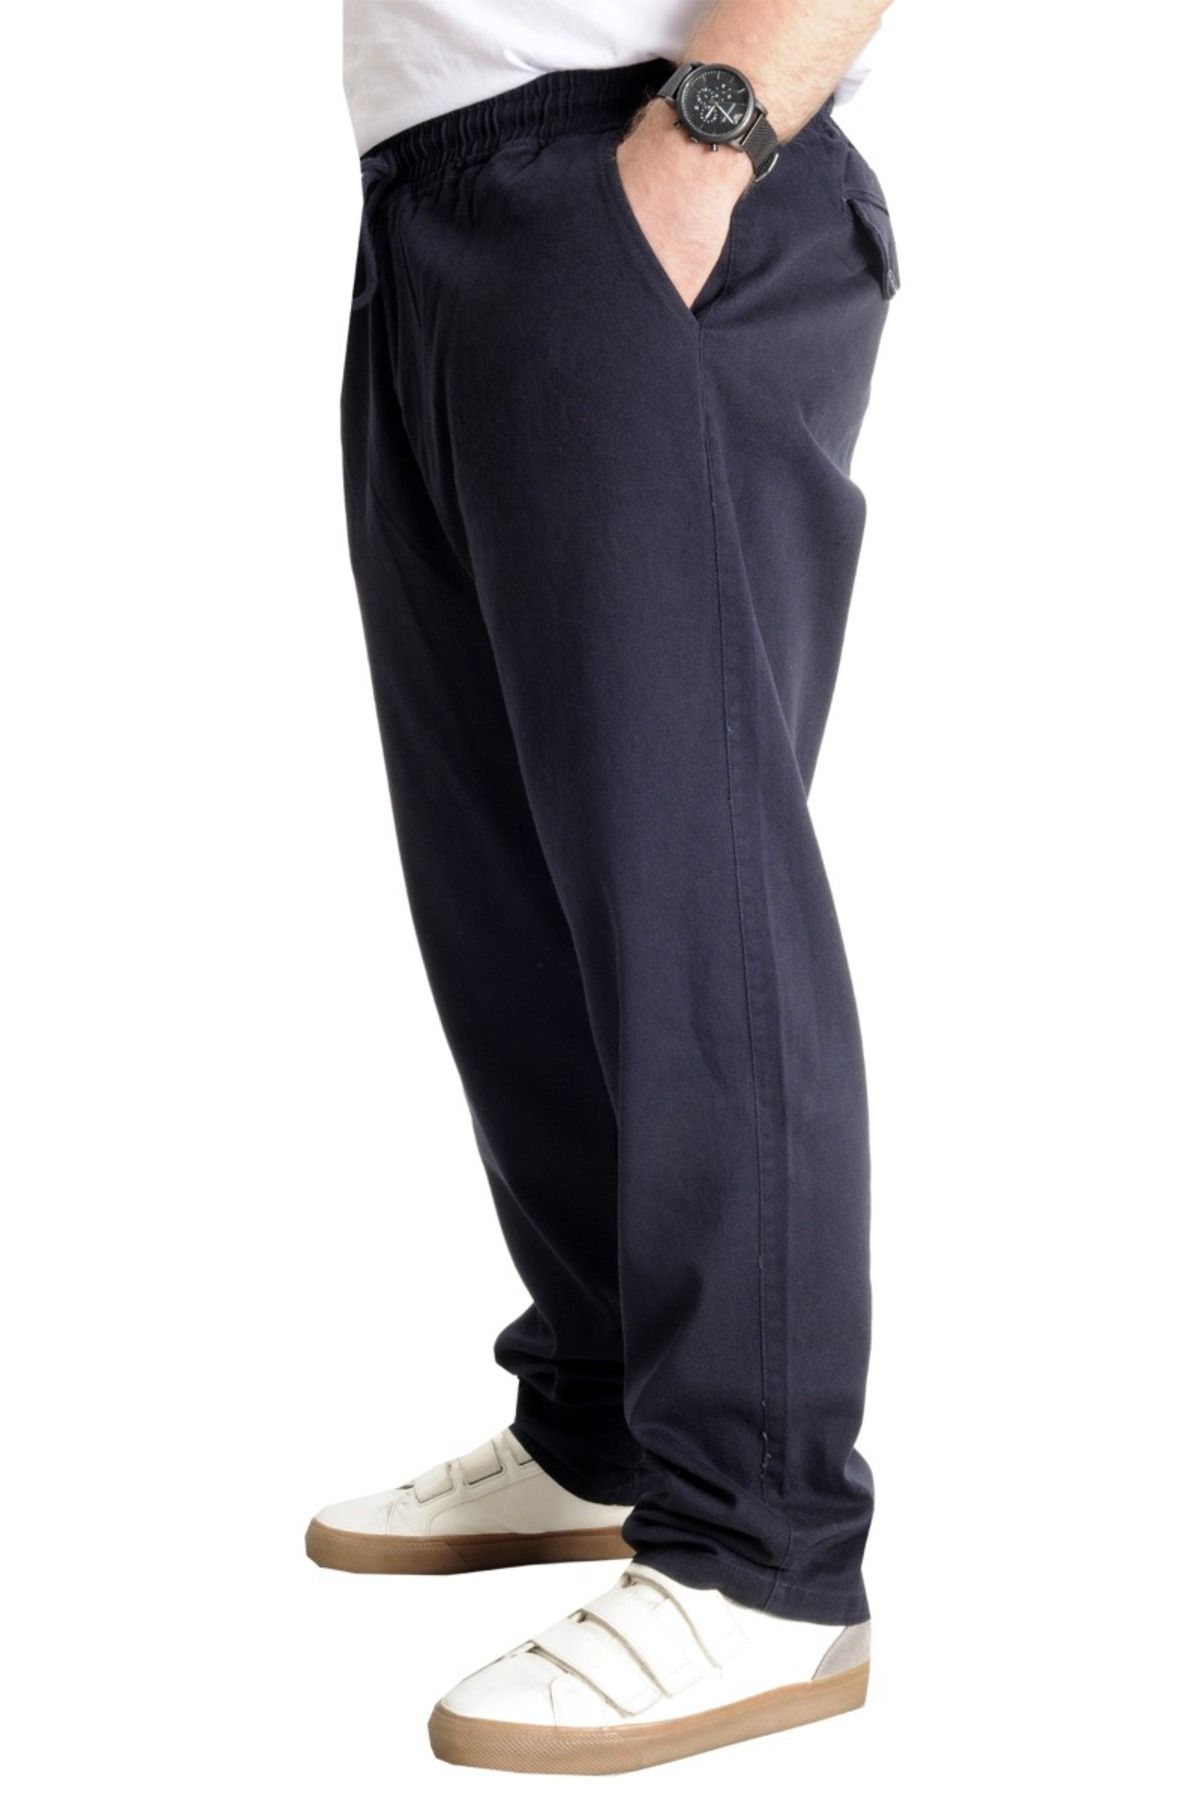 Hollister Floral Wide Leg Potato Sack Hi Waist Trouser Pants Sz M | eBay